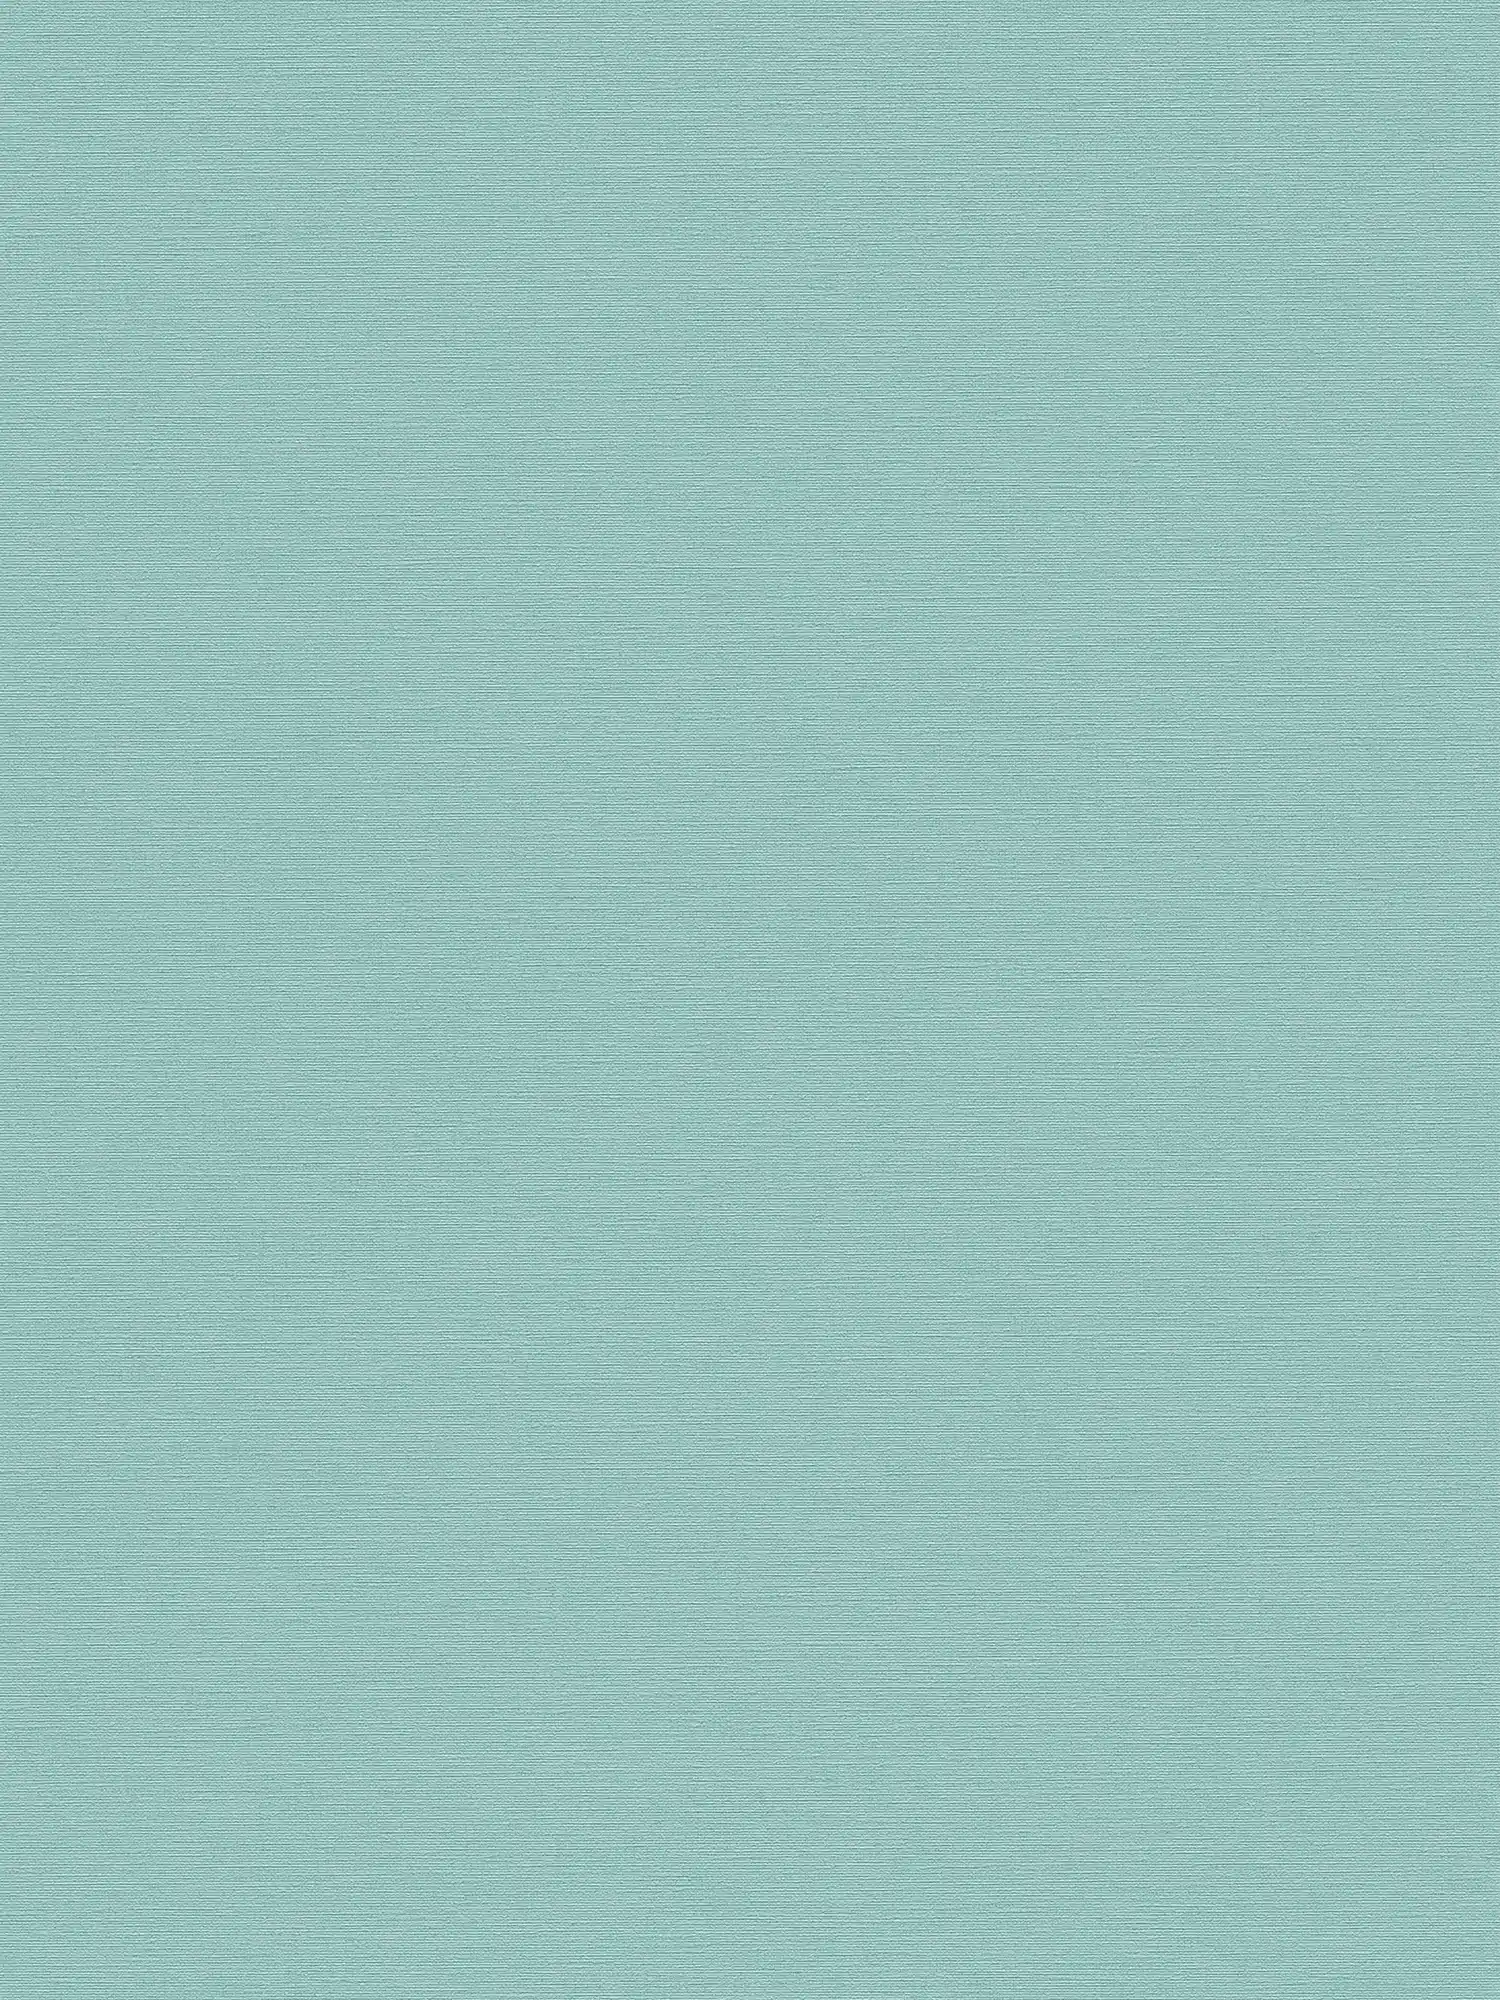 Plain non-woven wallpaper with linen look - green
